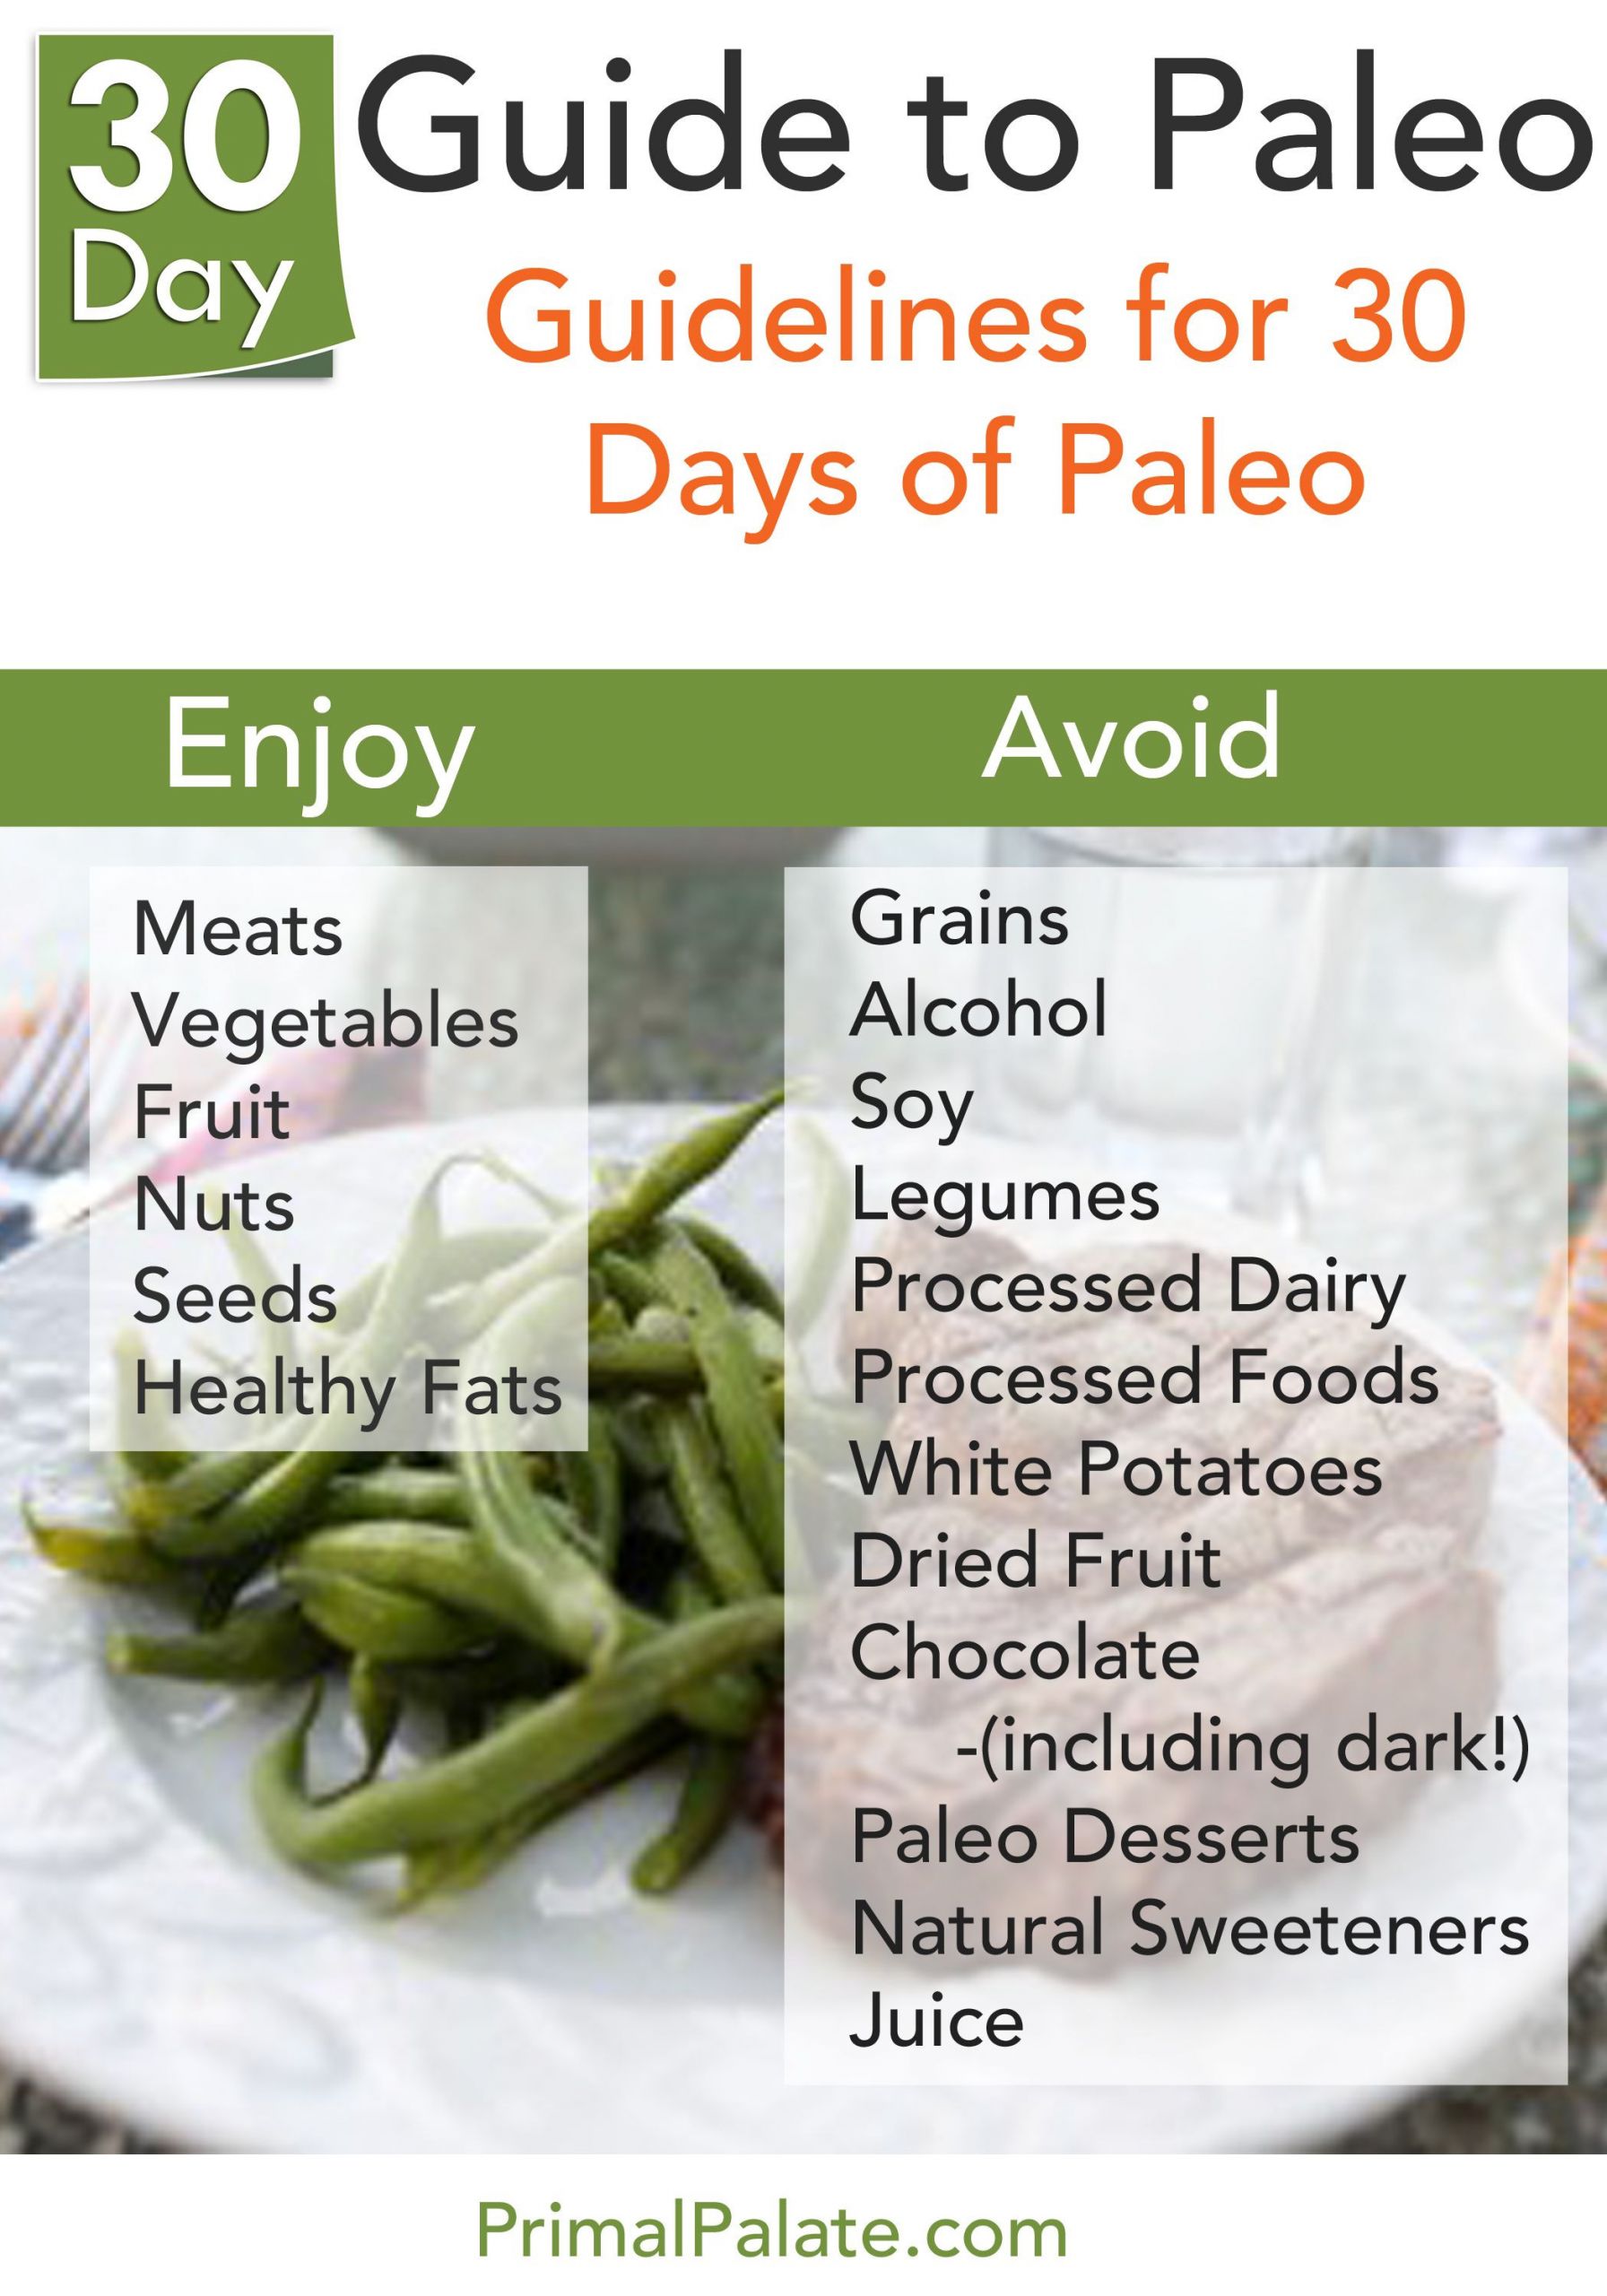 Strict Paleo Diet
 The 30 Day Guide to Paleo program follows STRICT Paleo